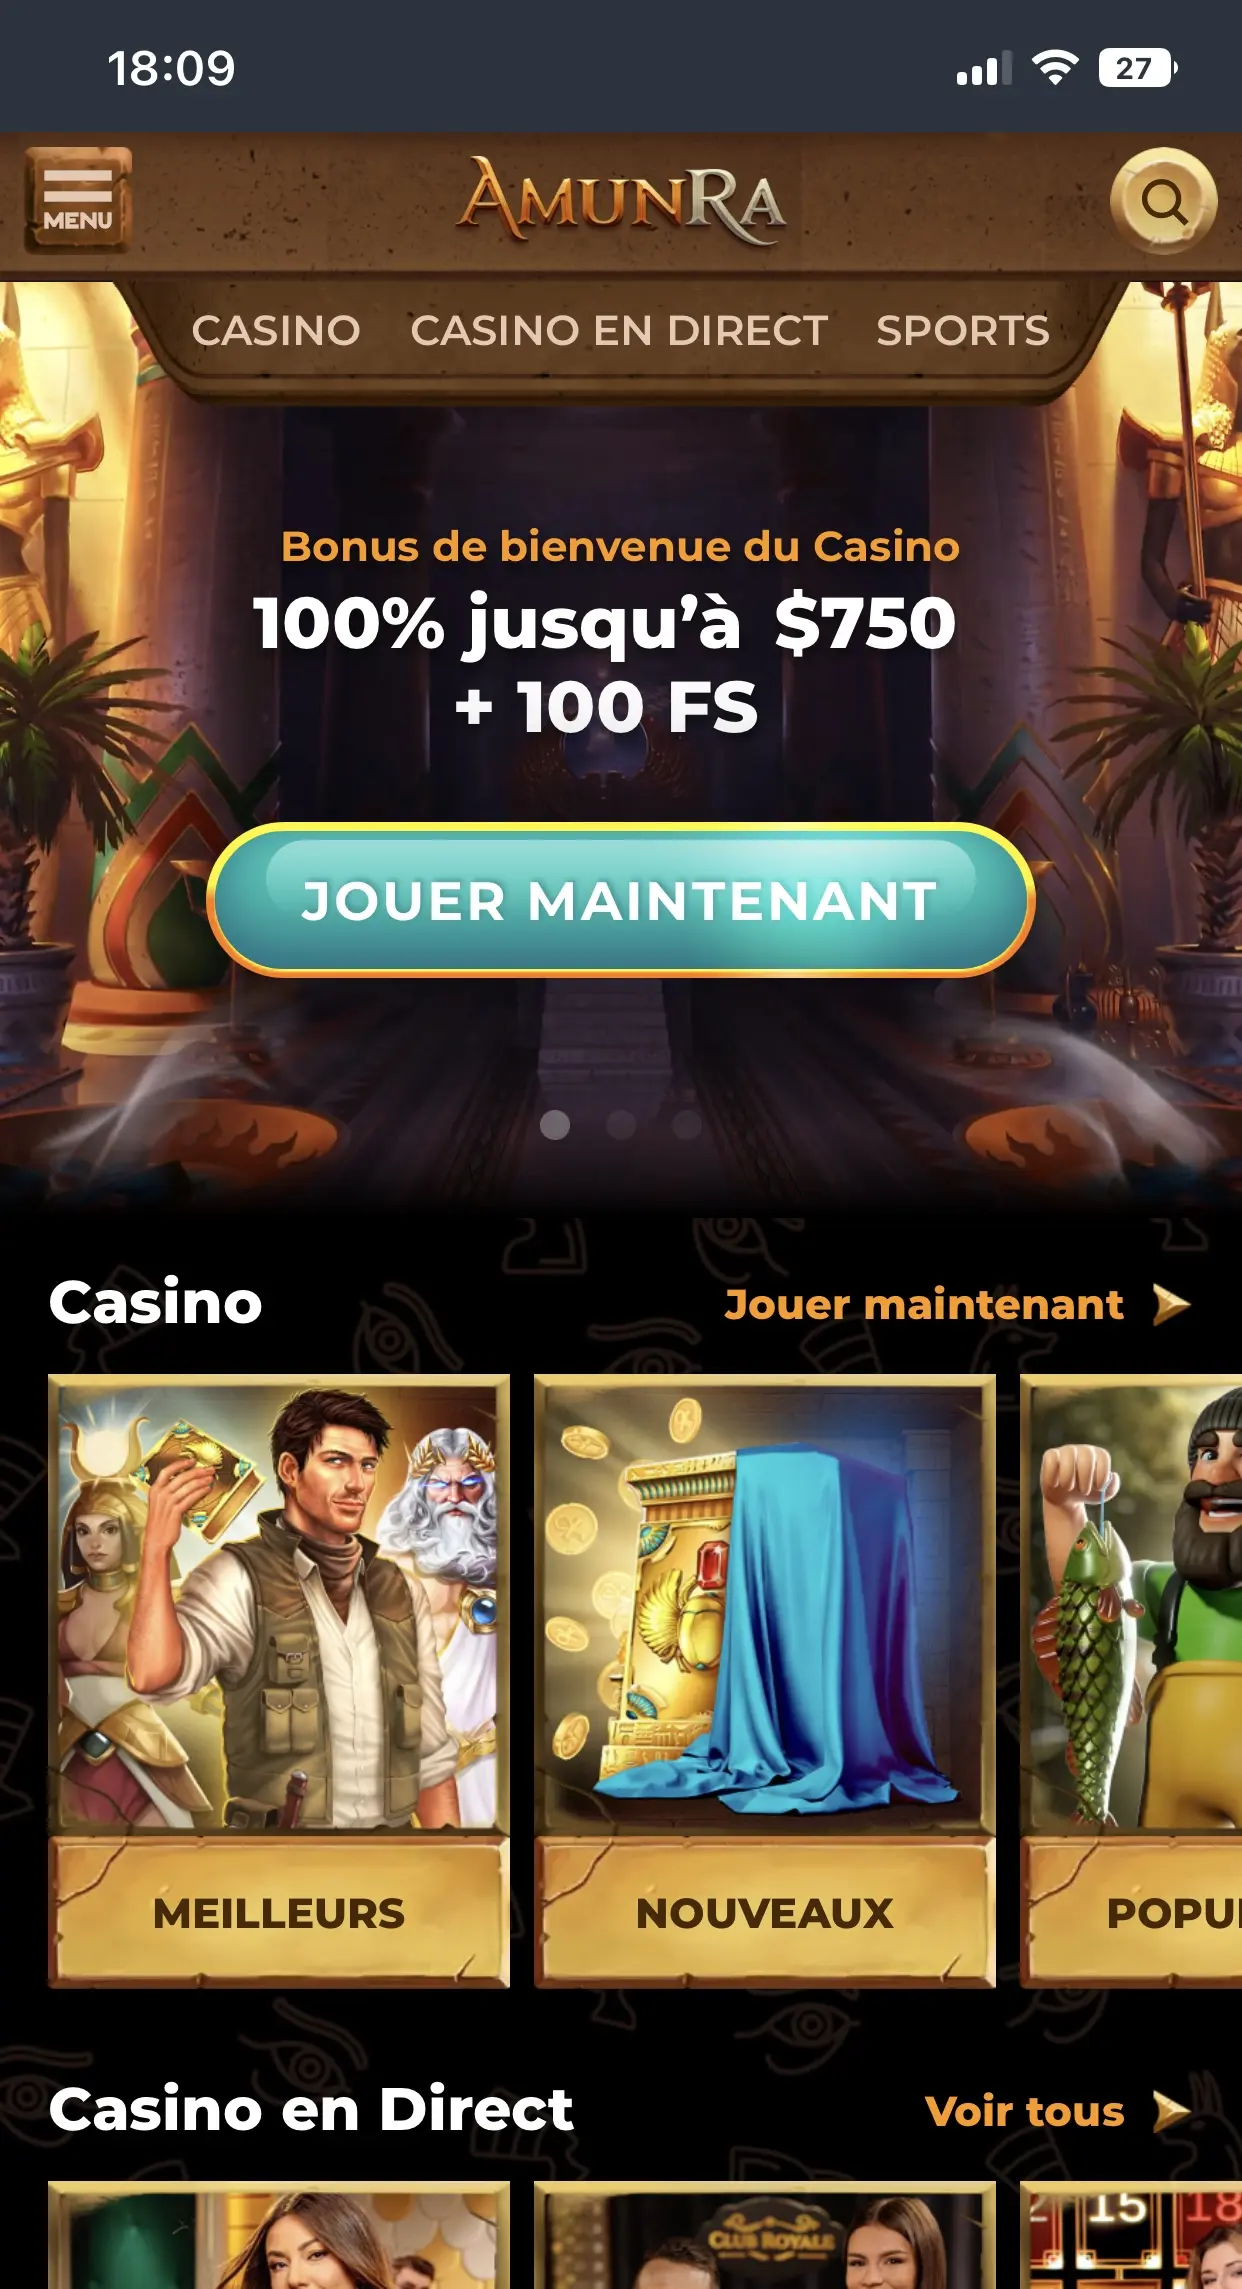 La version mobile du casino AmunRa